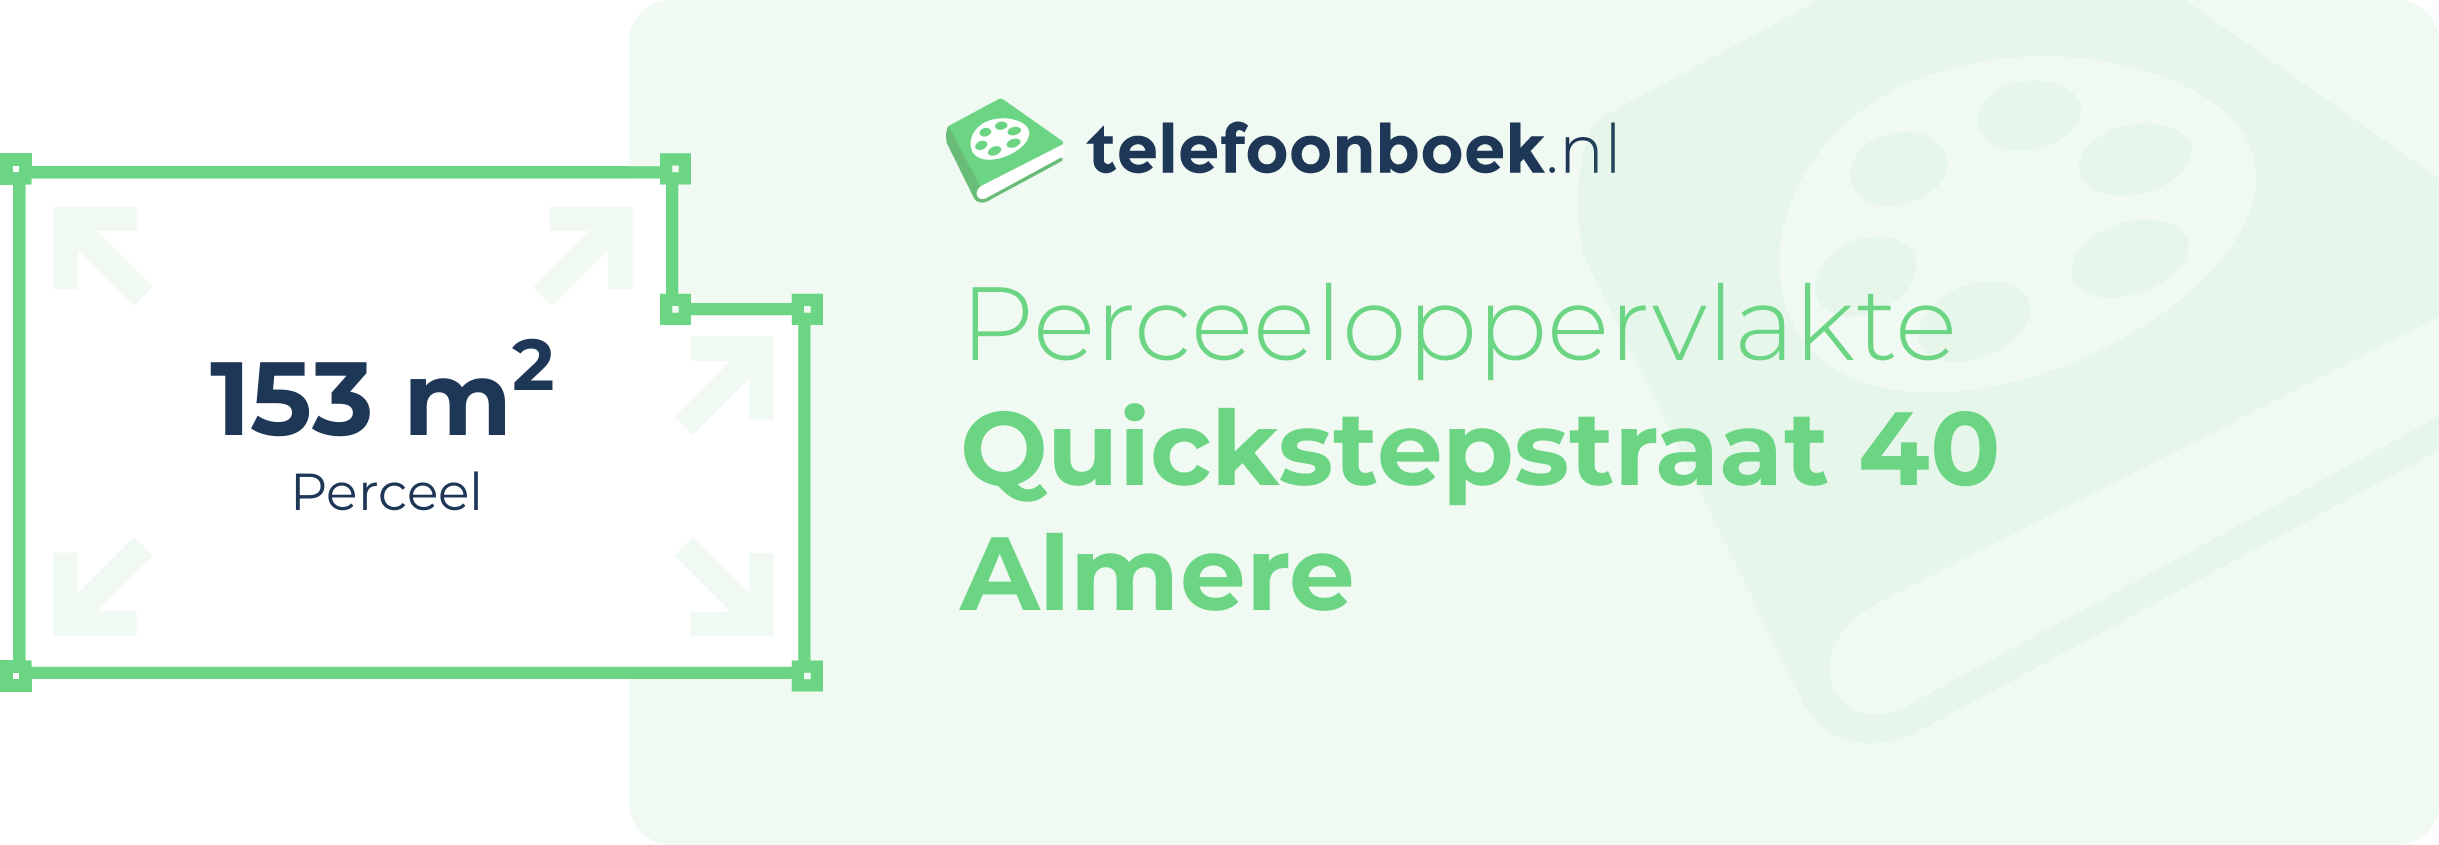 Perceeloppervlakte Quickstepstraat 40 Almere